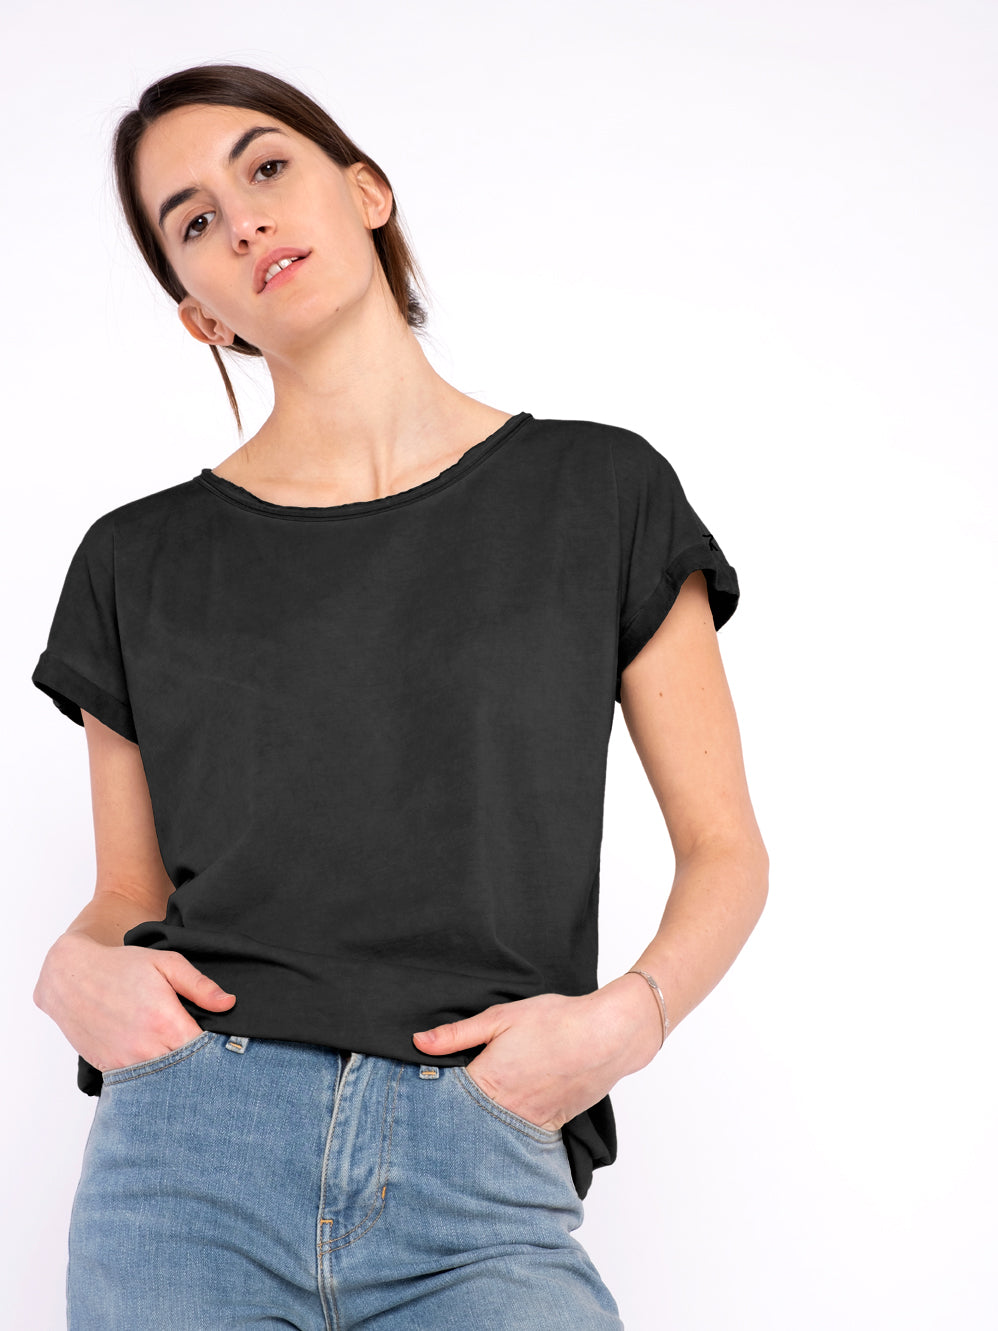 Women T-Shirt Black (loose and trendy) - ERDBÄR #Worldchanger